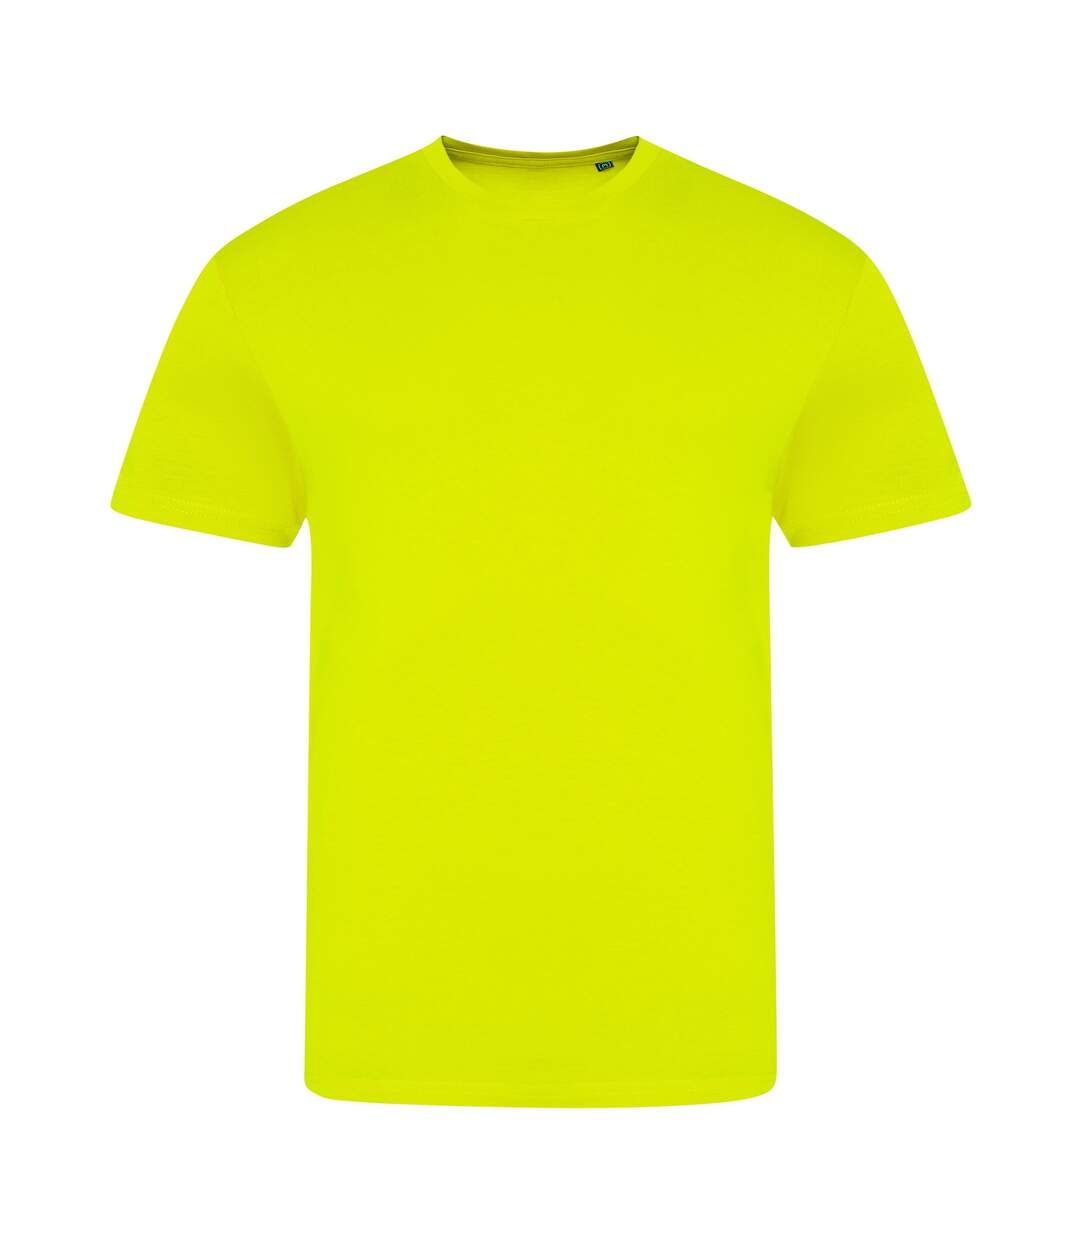 Awdis - T-shirt ELECTRIC TRI-BLEND - Adulte (Jaune vif) - UTRW7842